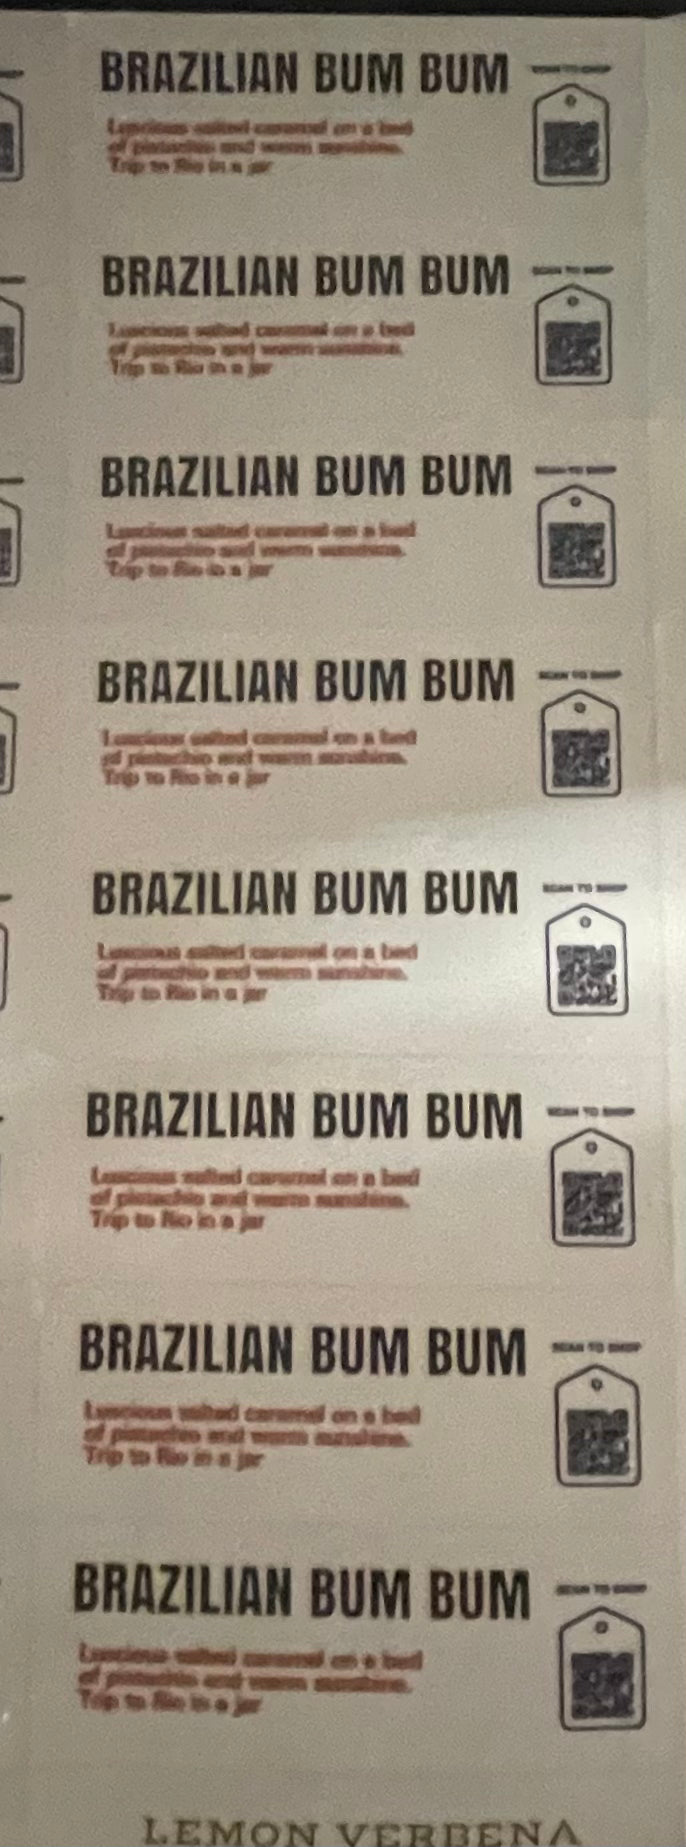 BRAZILIAN BUM BUM BODY YOGURT